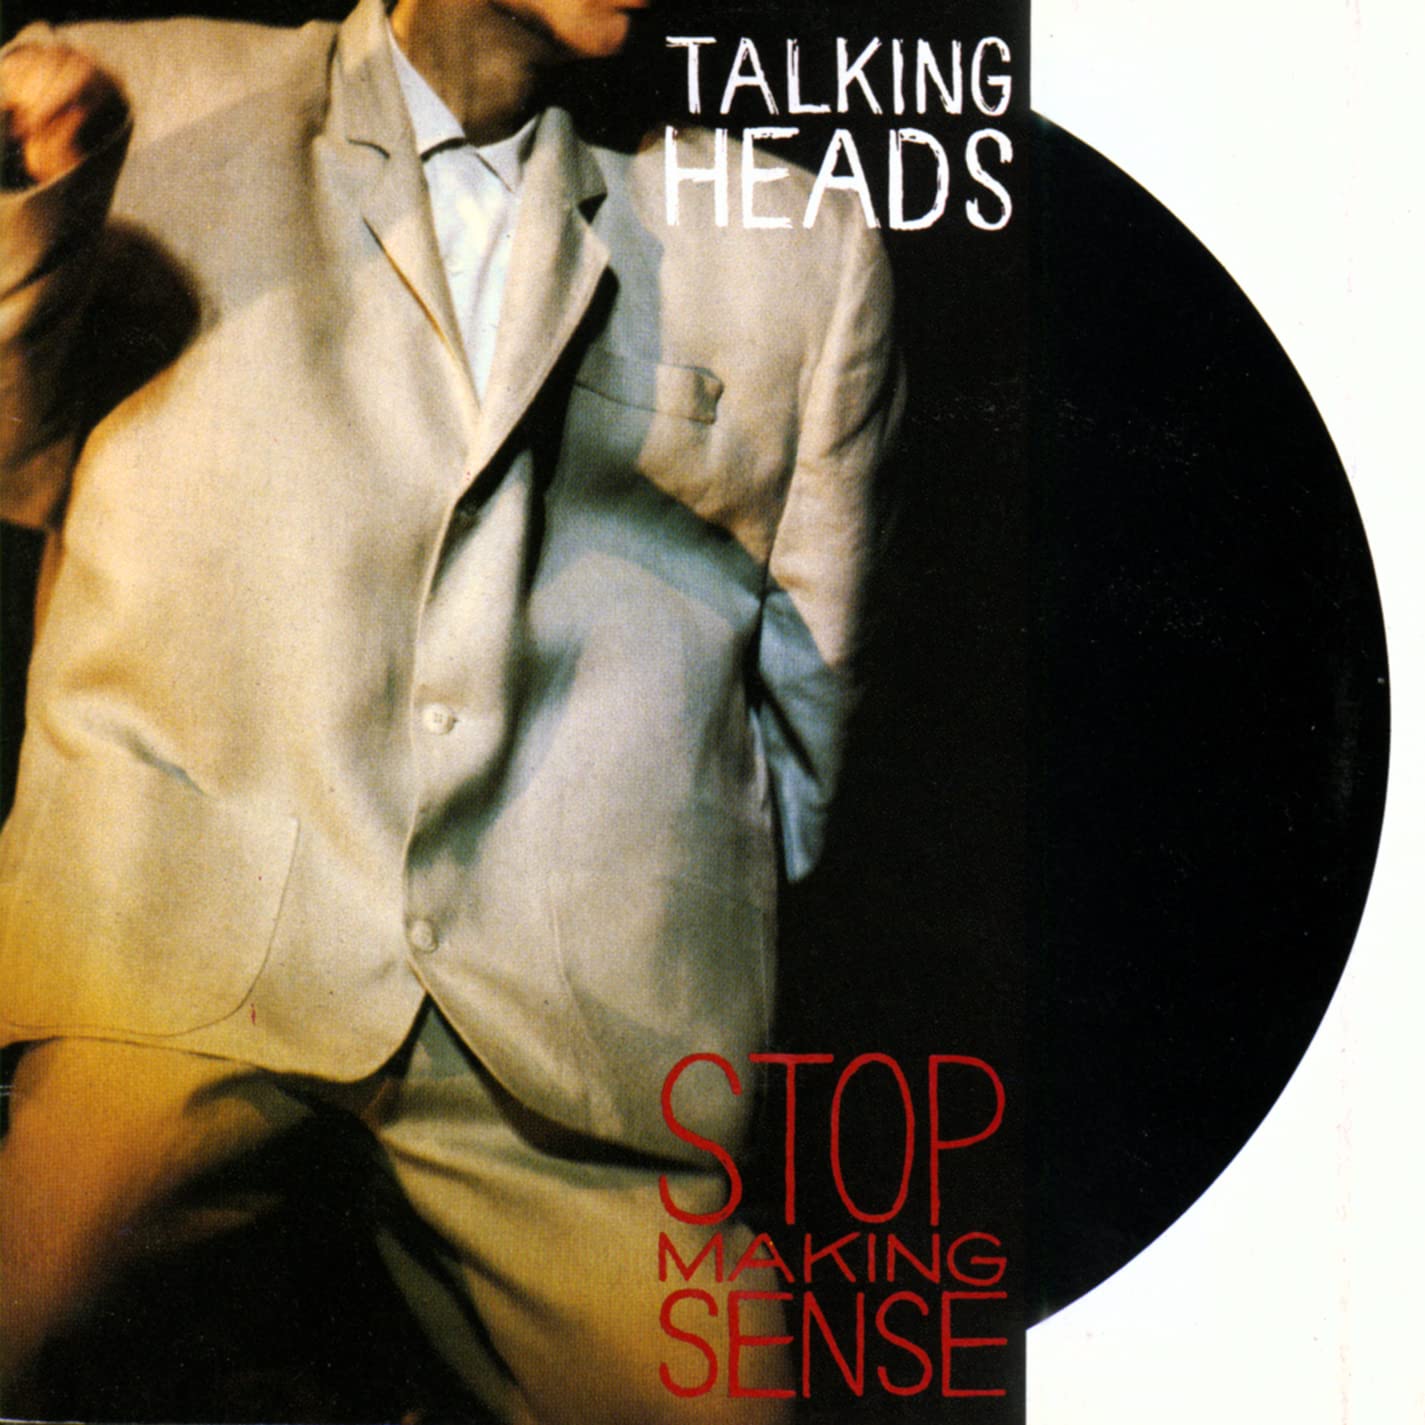 Copertina Vinile 33 giri Stop Making Sense di Talking Heads